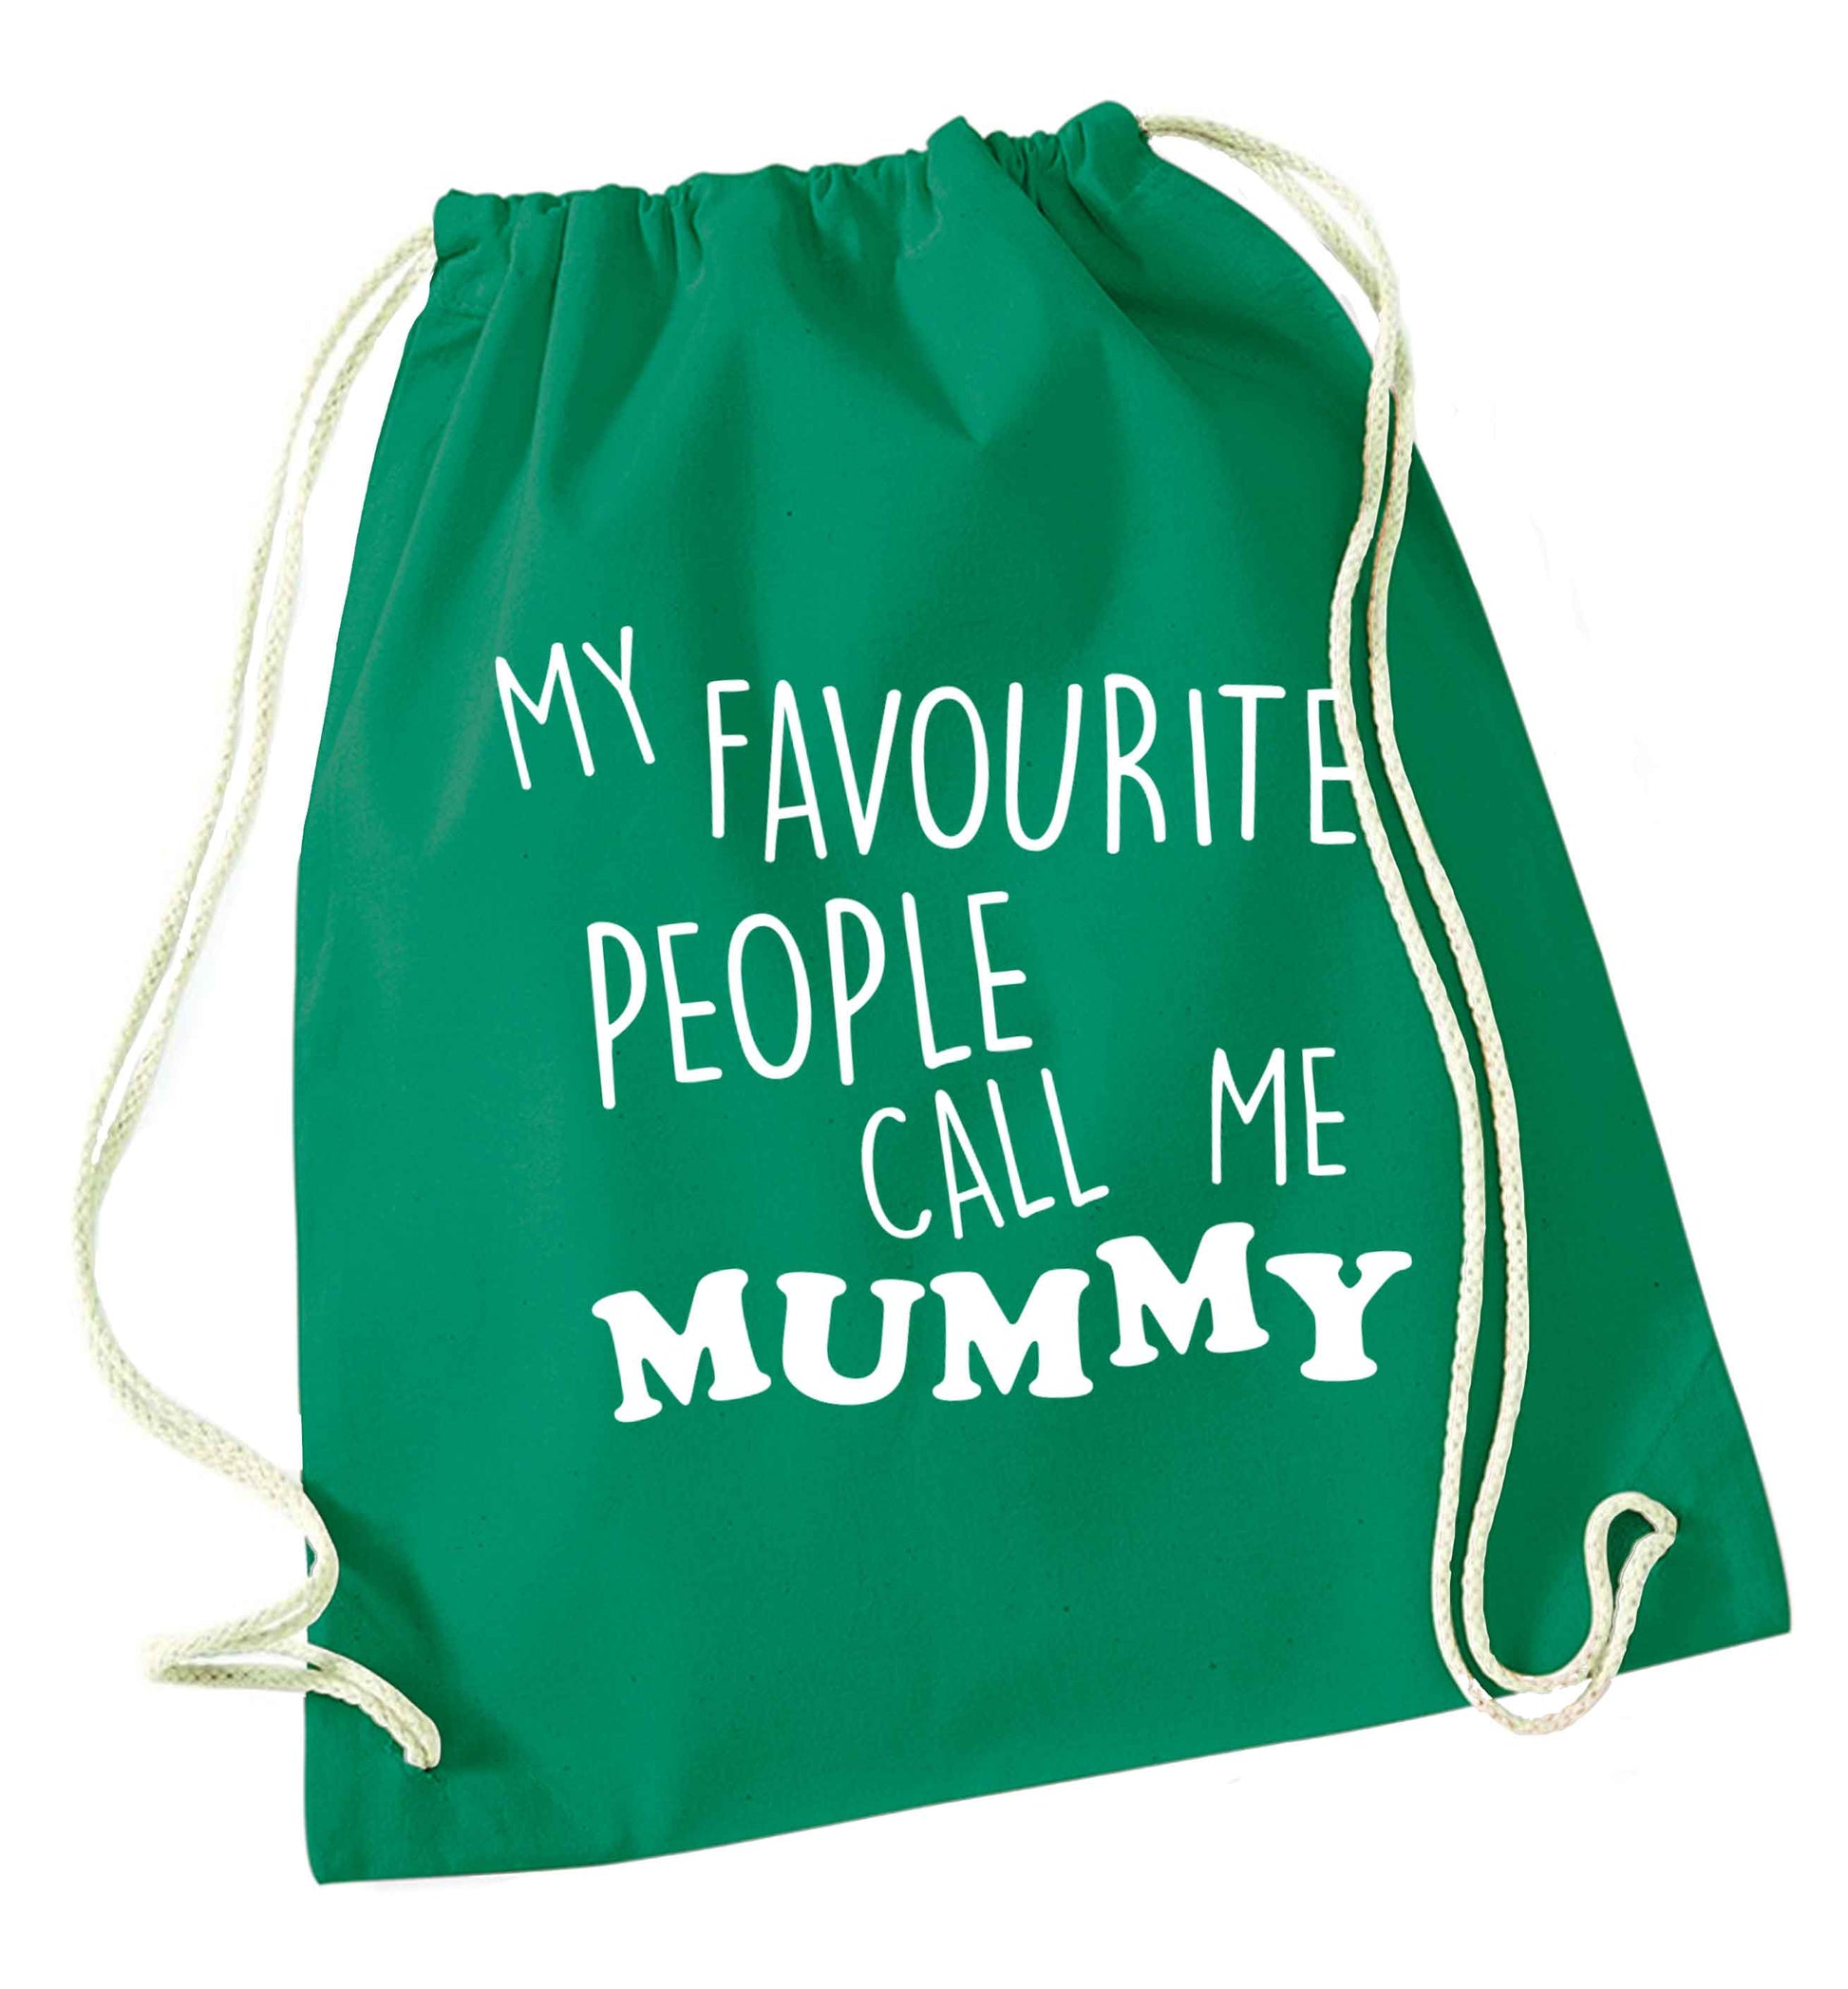 My favourite people call me mummy green drawstring bag